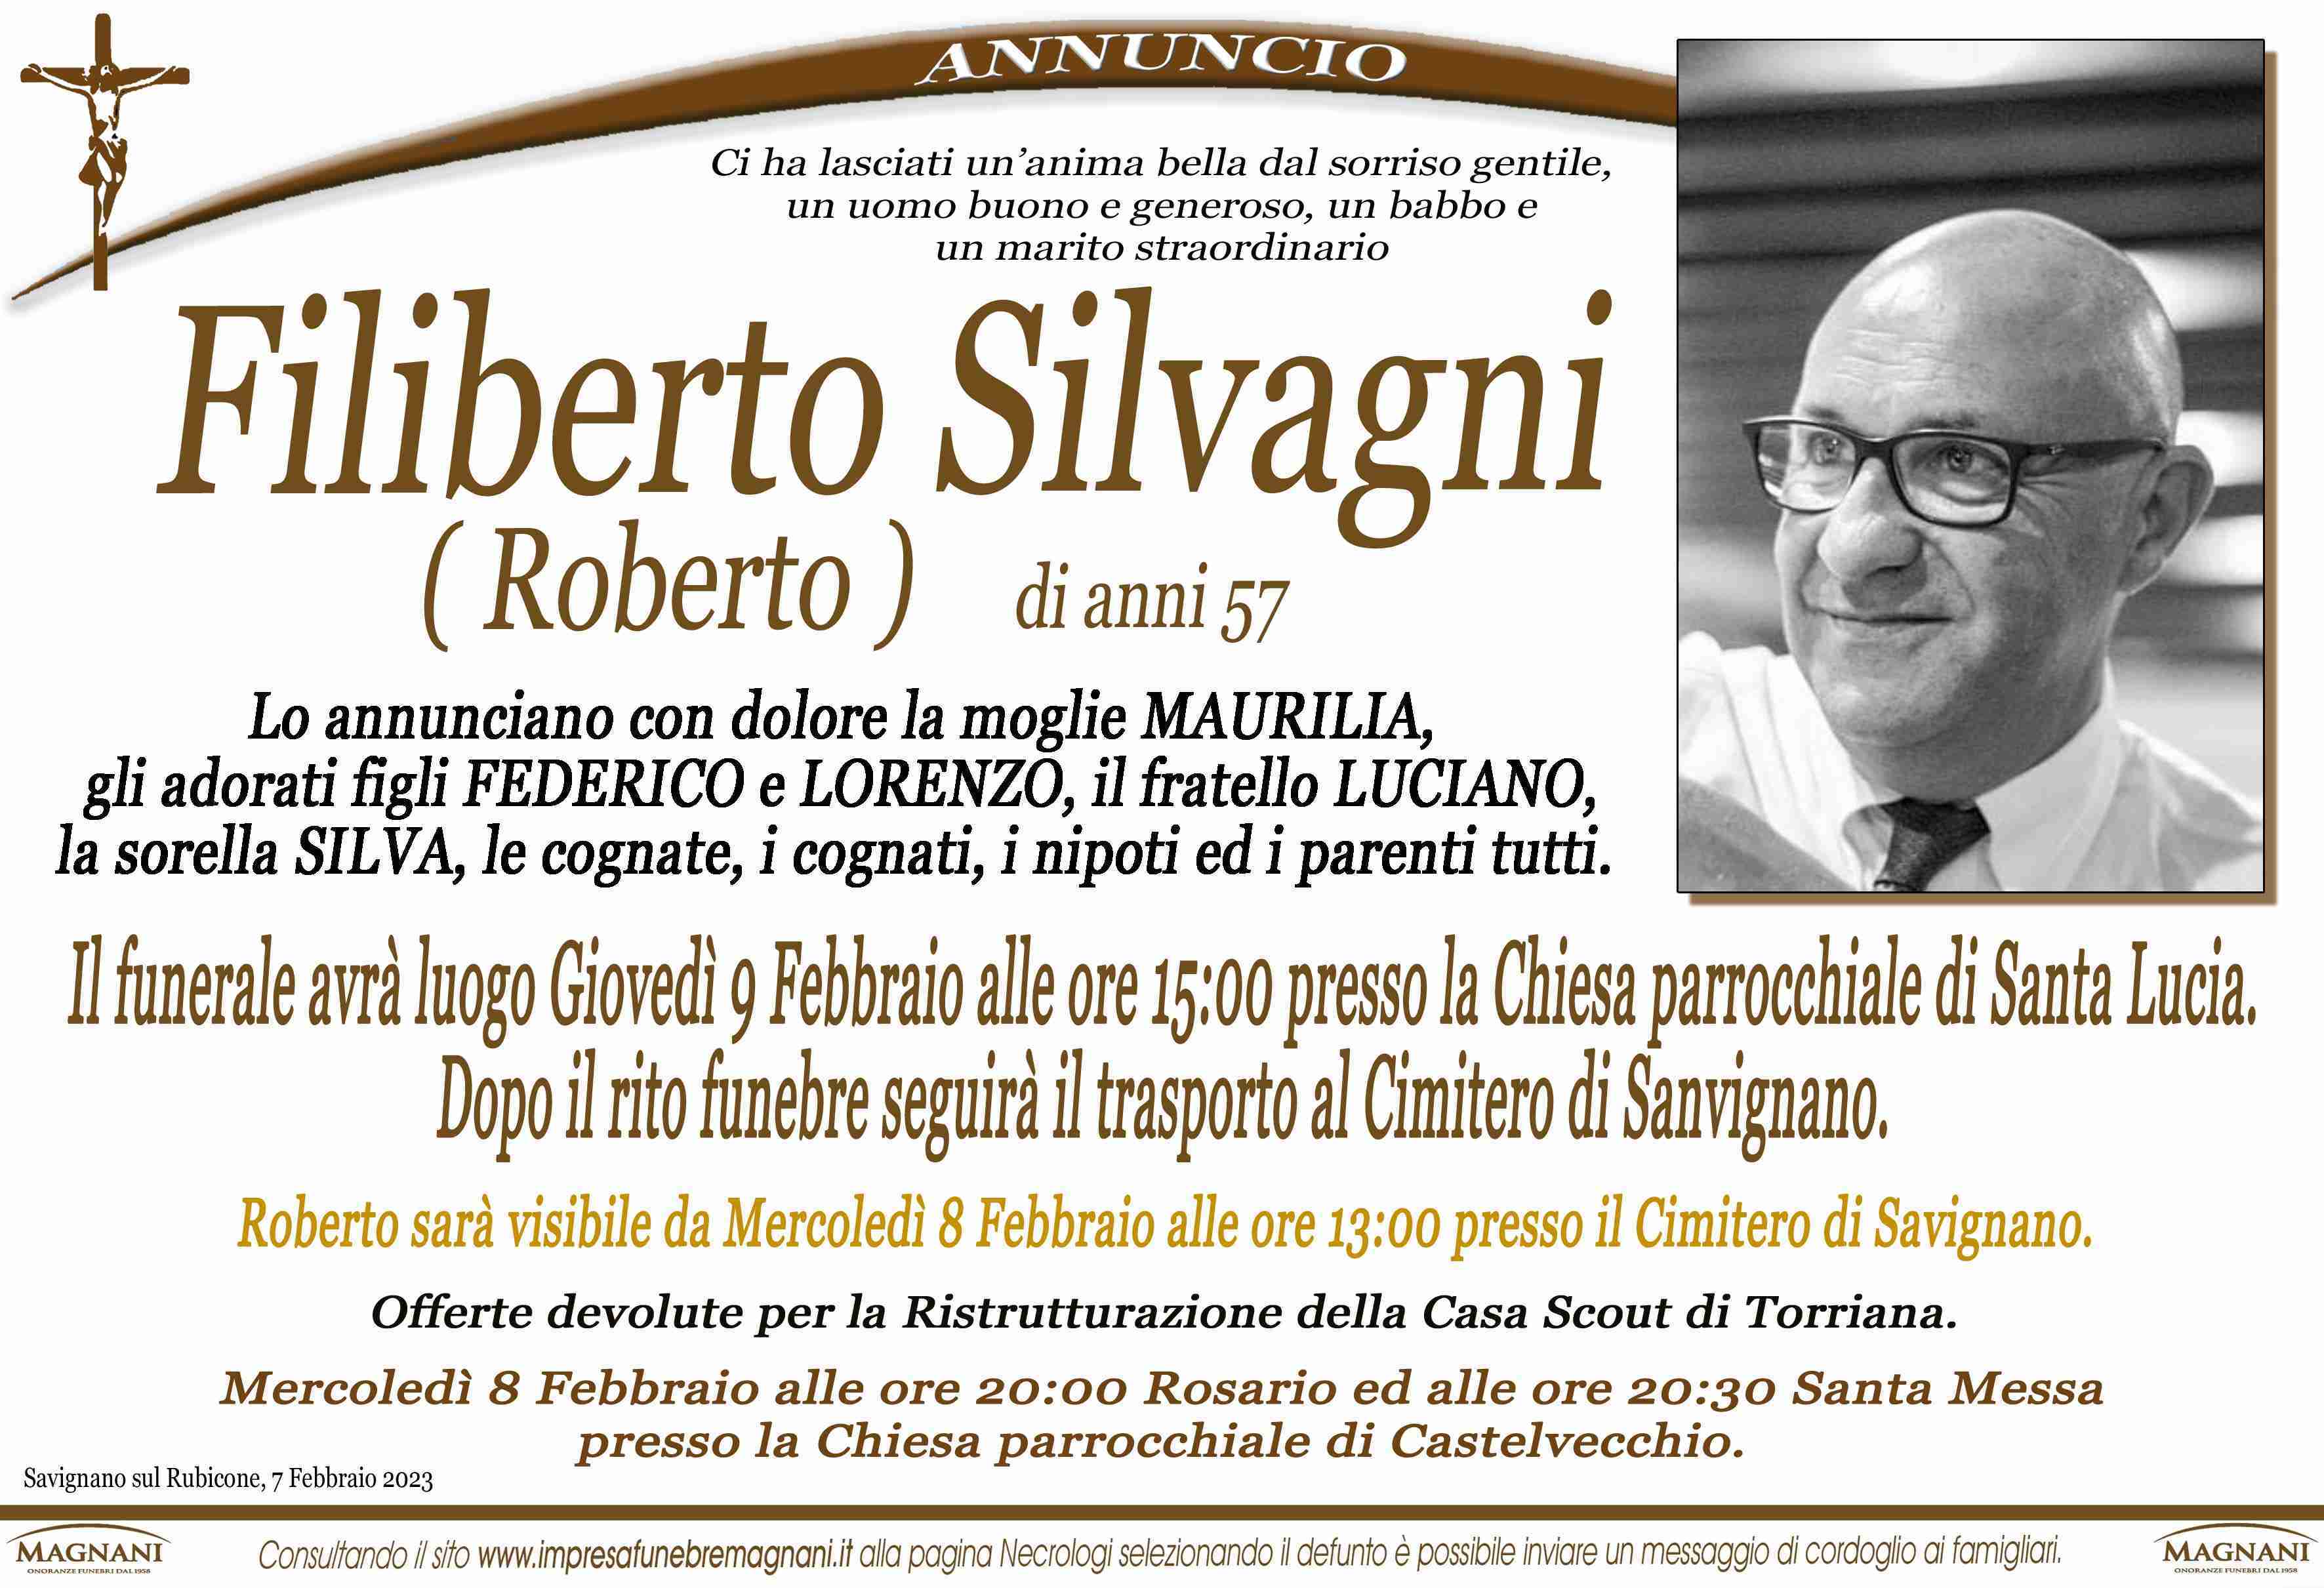 Filiberto Silvagni